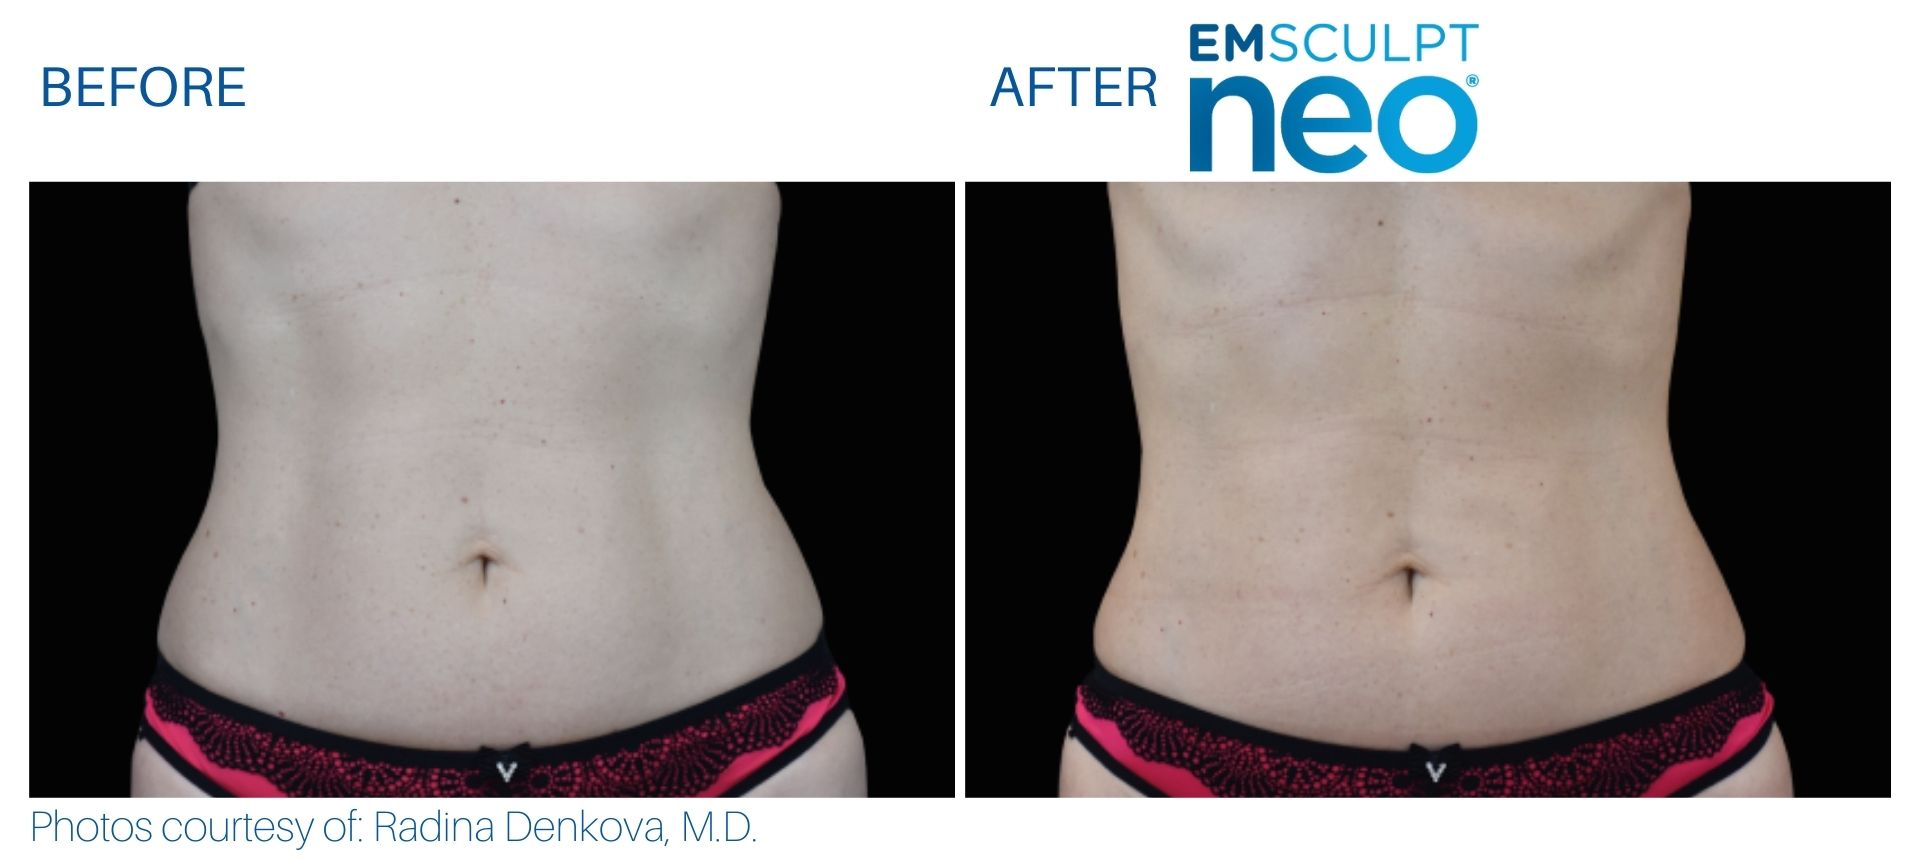 Emsculpt Neo® is a revolutionary body sculpting treatment that has